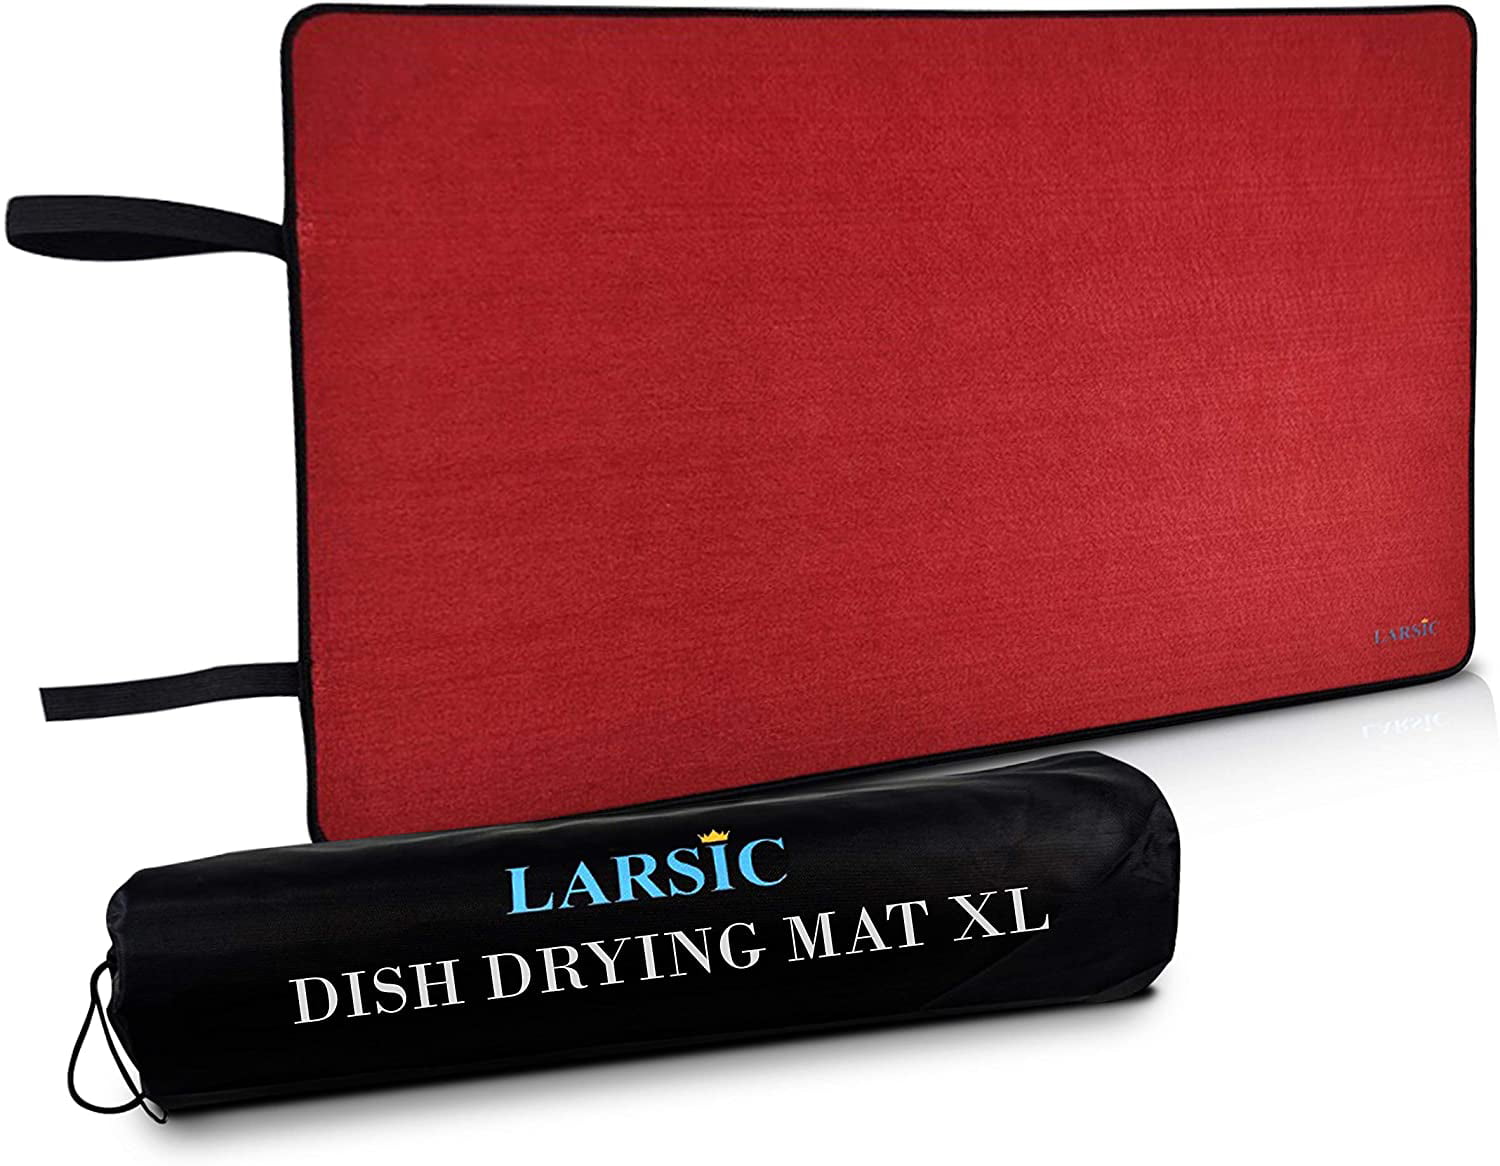  Dish Drying Mat - 24x16 Large Dish Drying Mat for